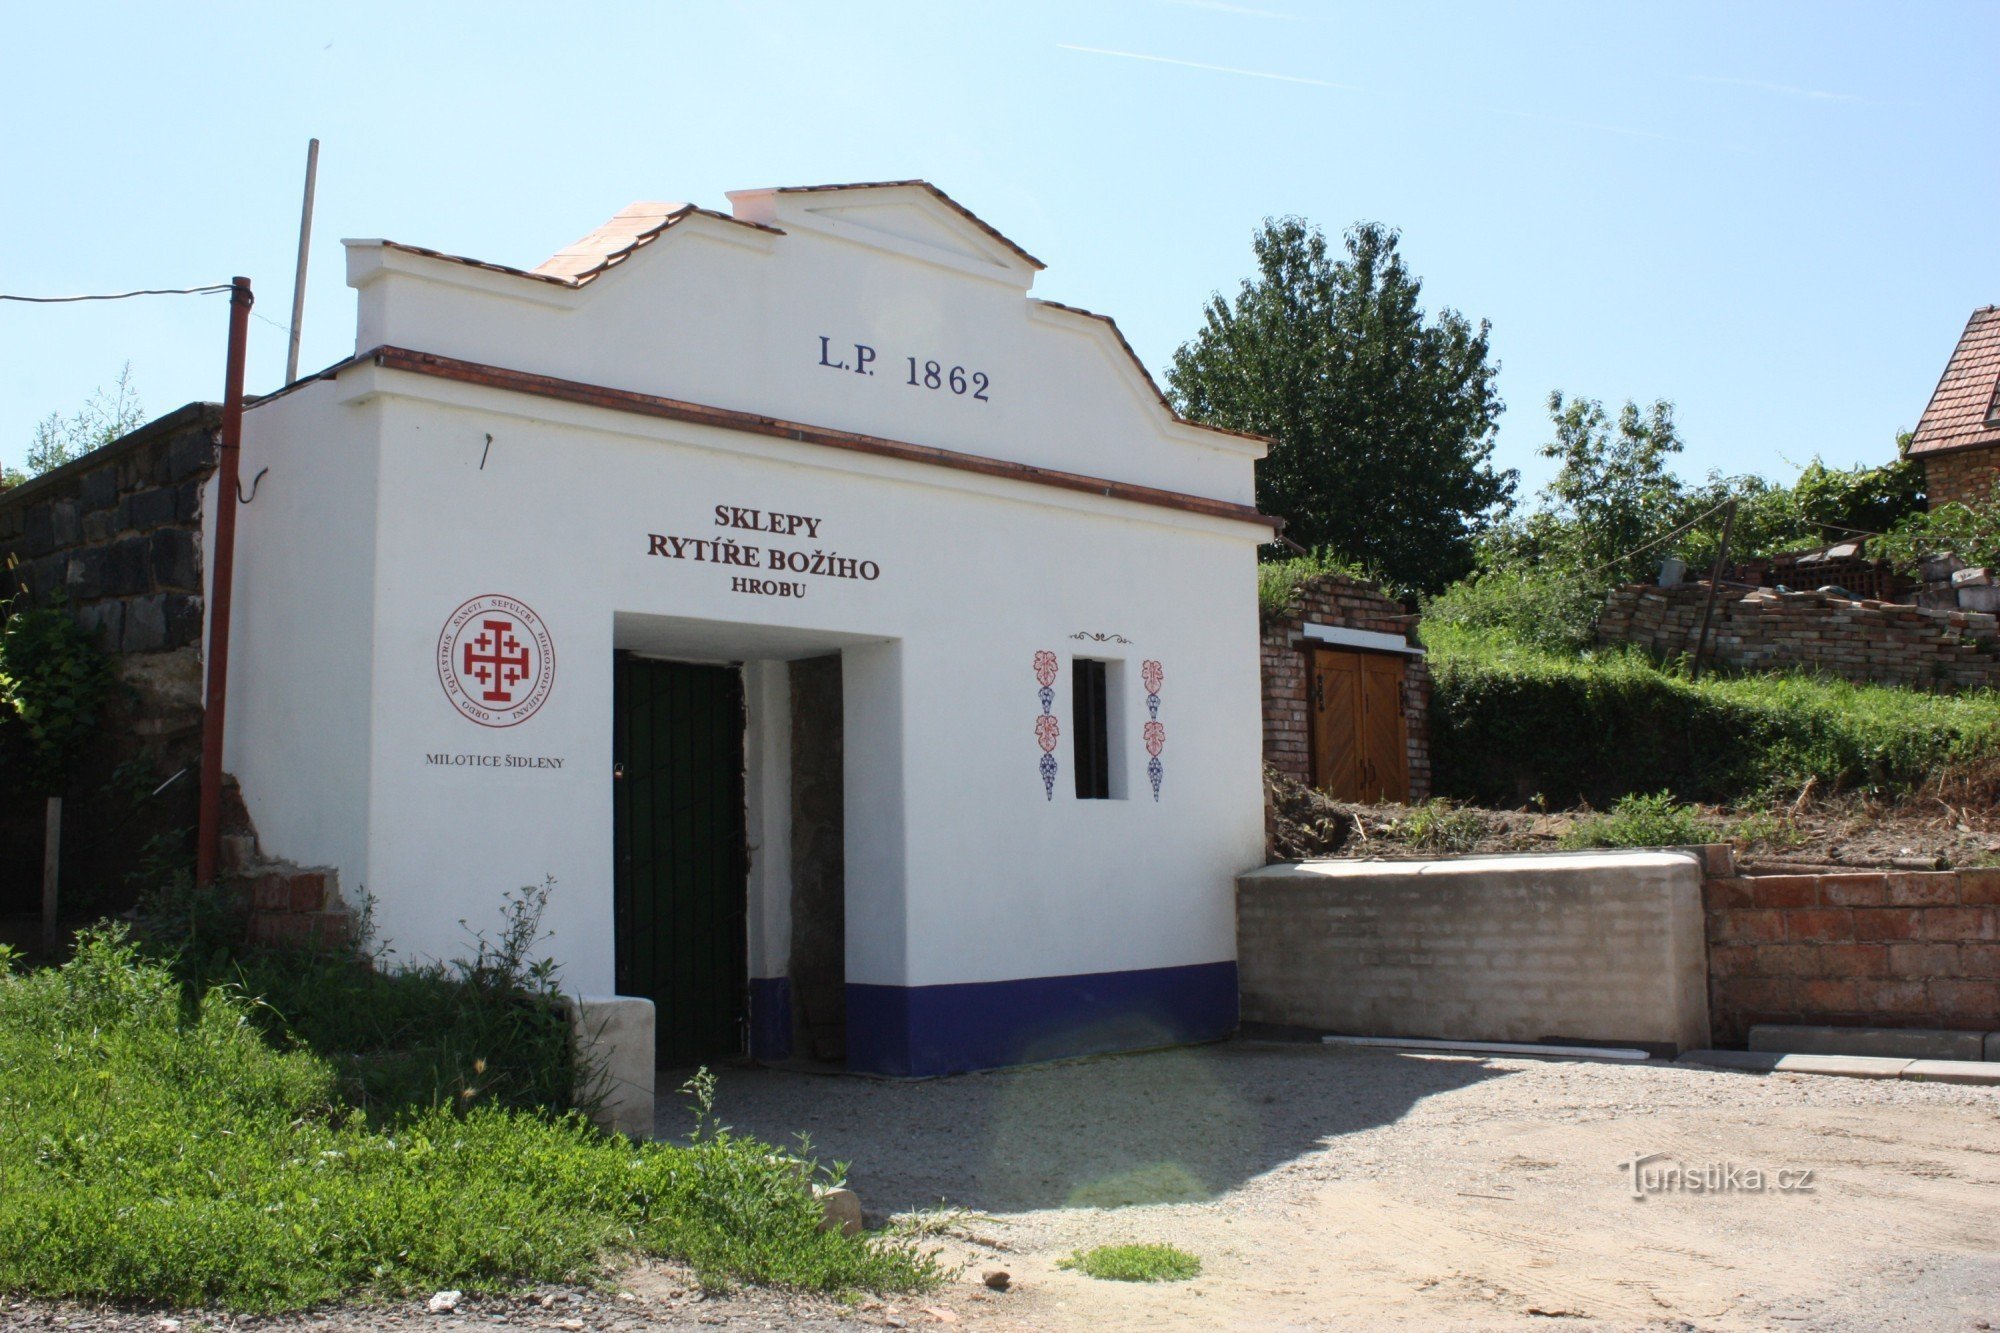 Šidleny wine cellars in Milotice.